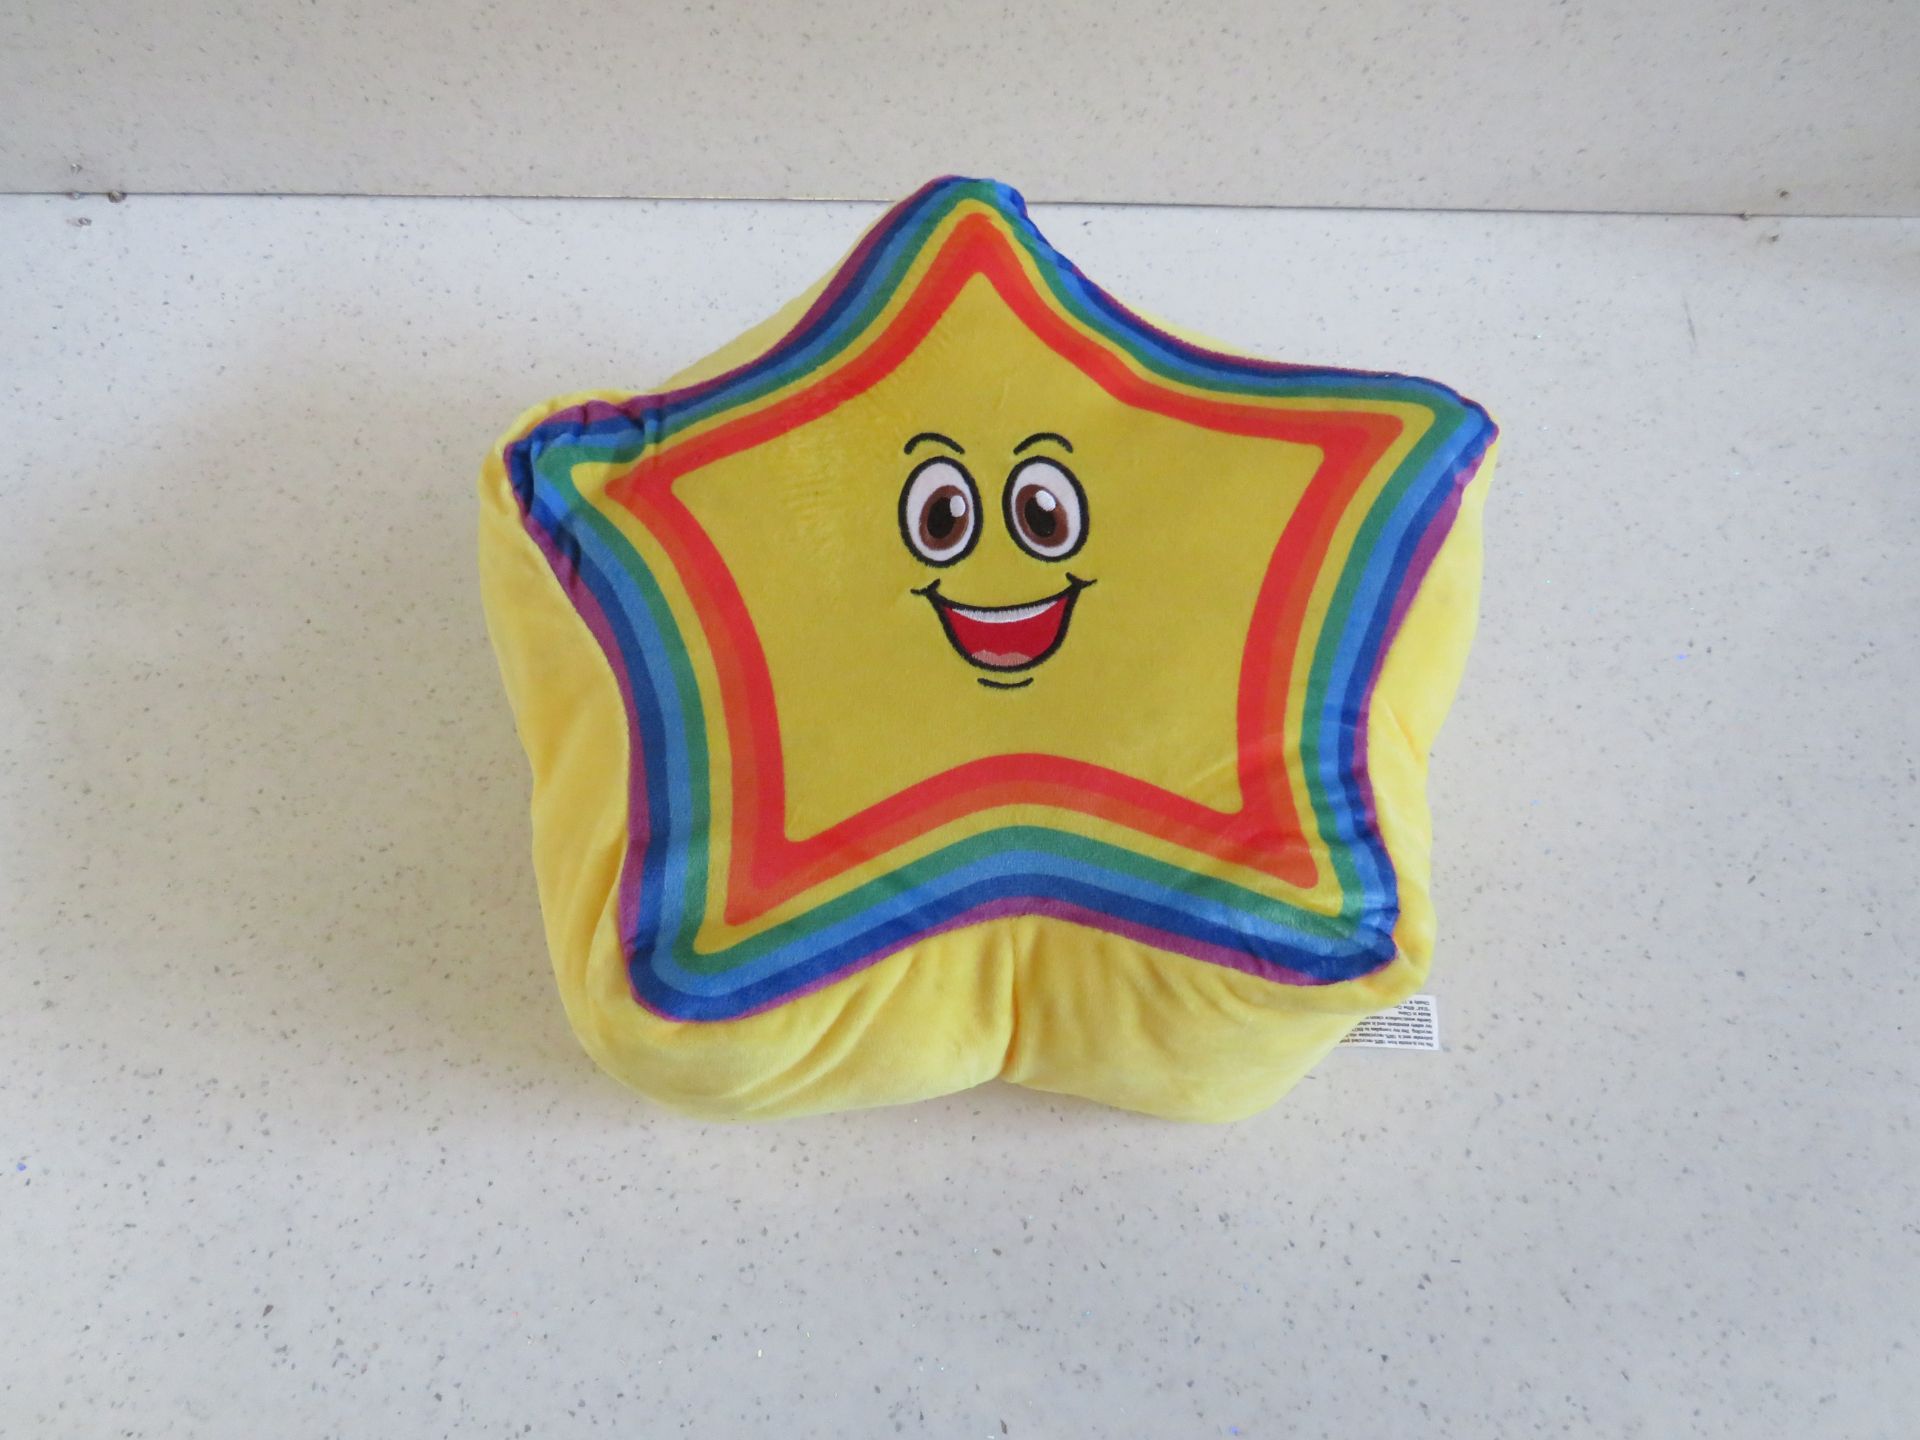 2x Yellow & Rainbow Star Shaped Cushion 33cm - New.